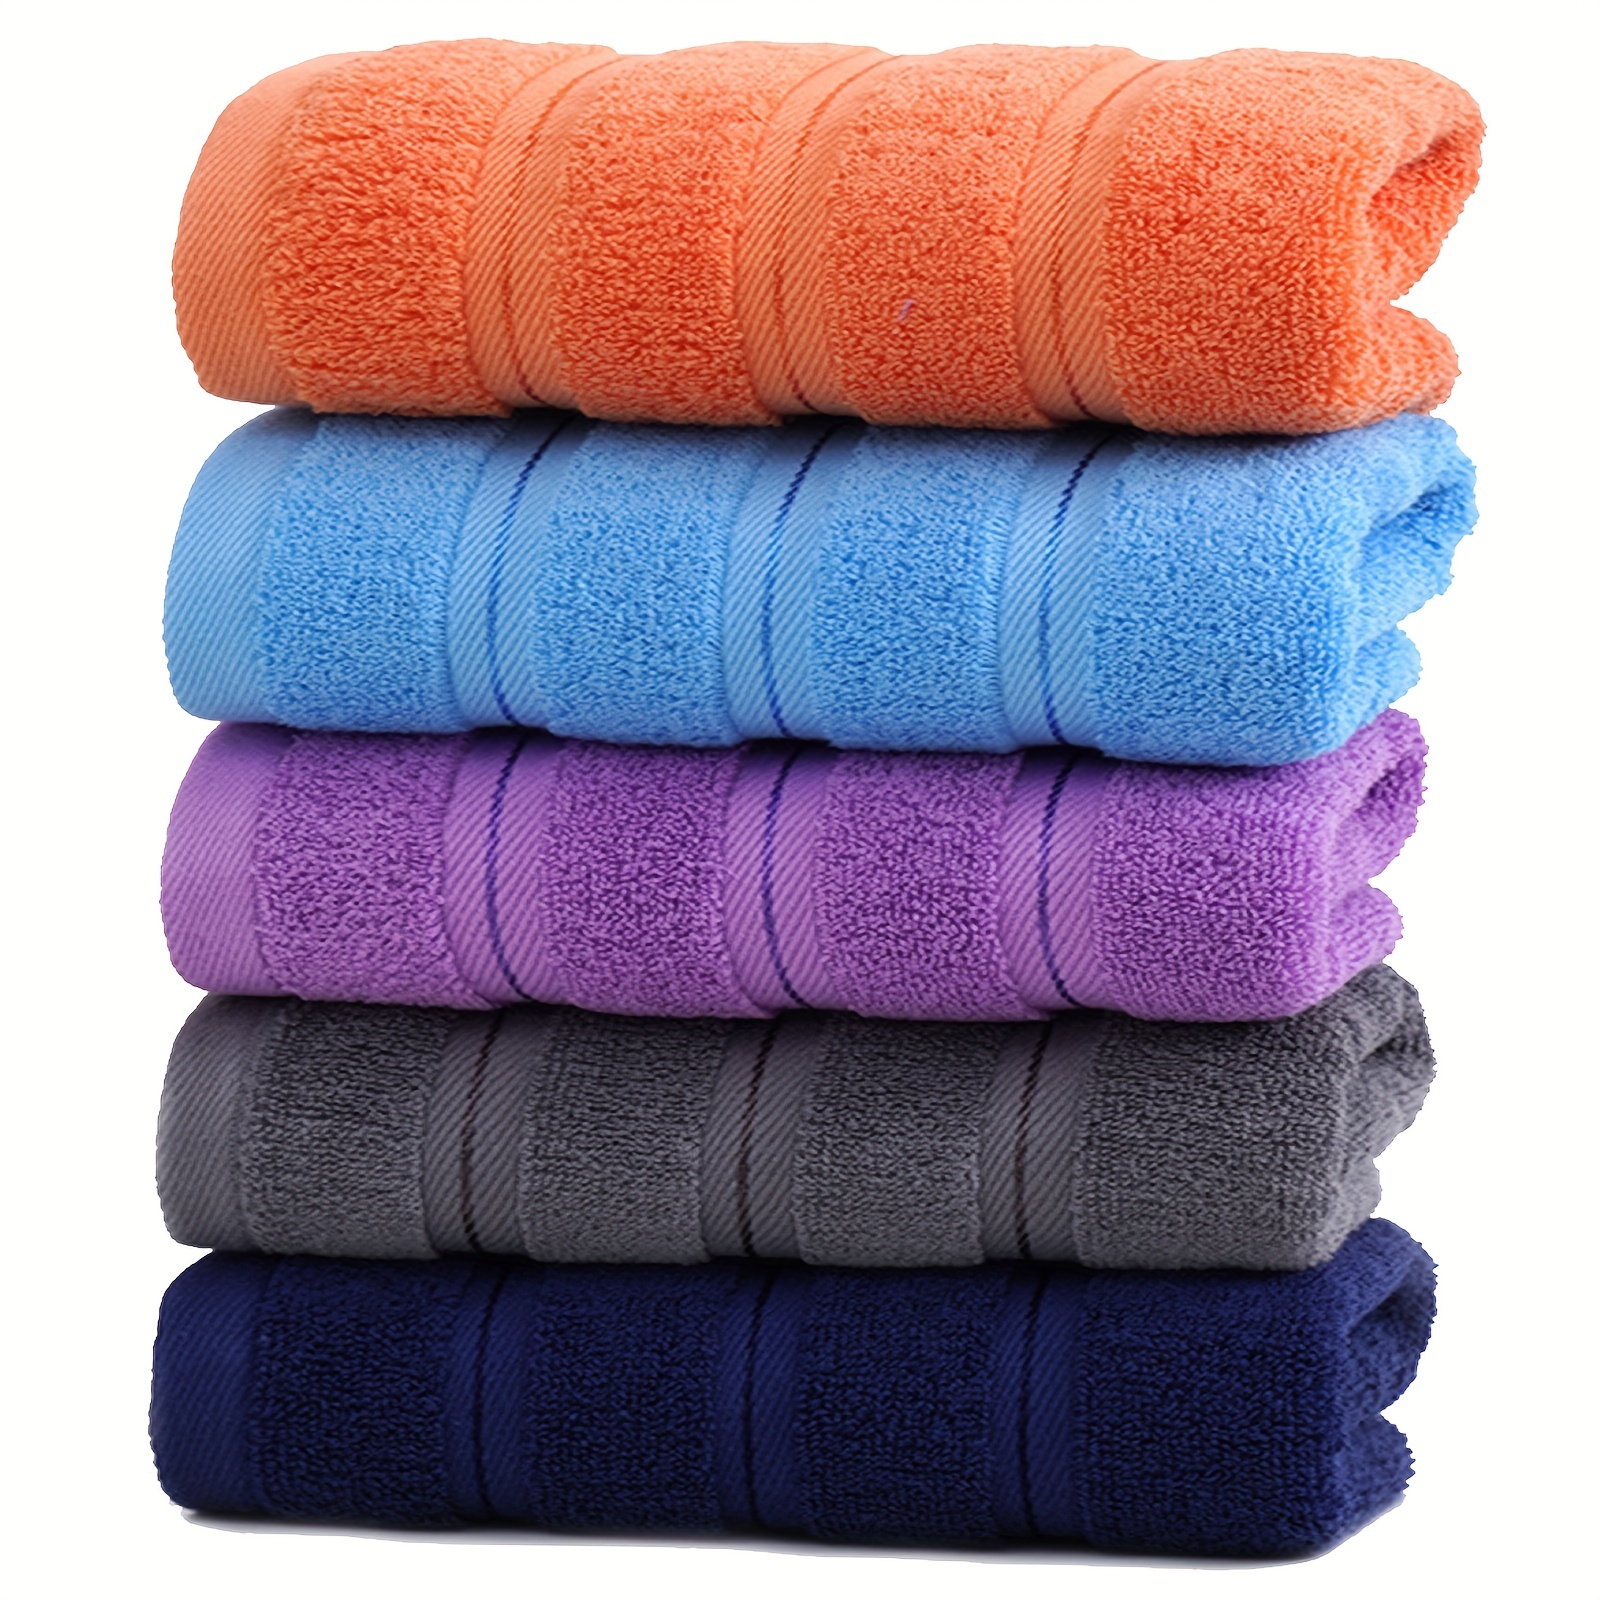 1pc Large Size Soft & Anti-shedding Bath Towel, Color Random